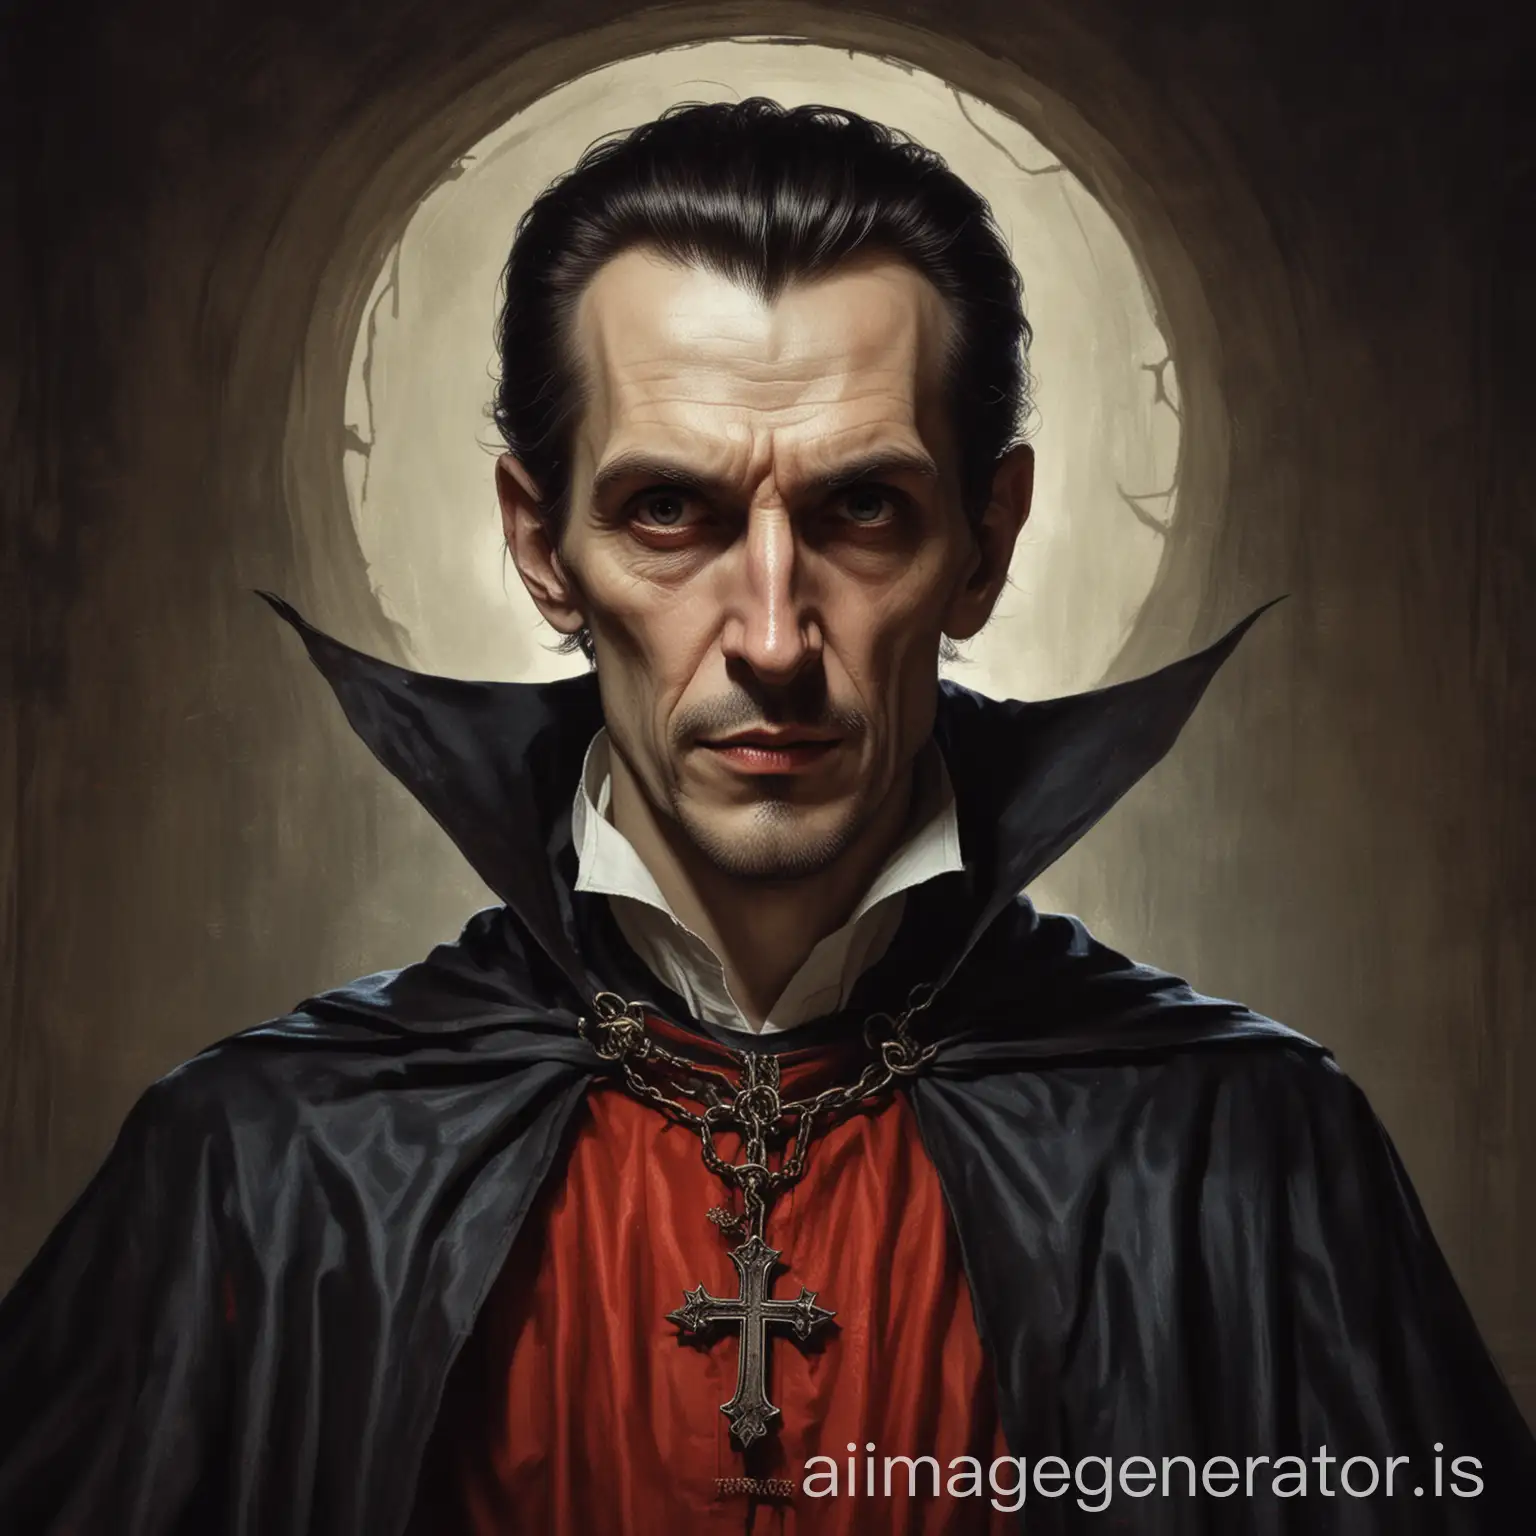 Saint-Dracula-Artwork-Depicting-Elegance-and-Mystery